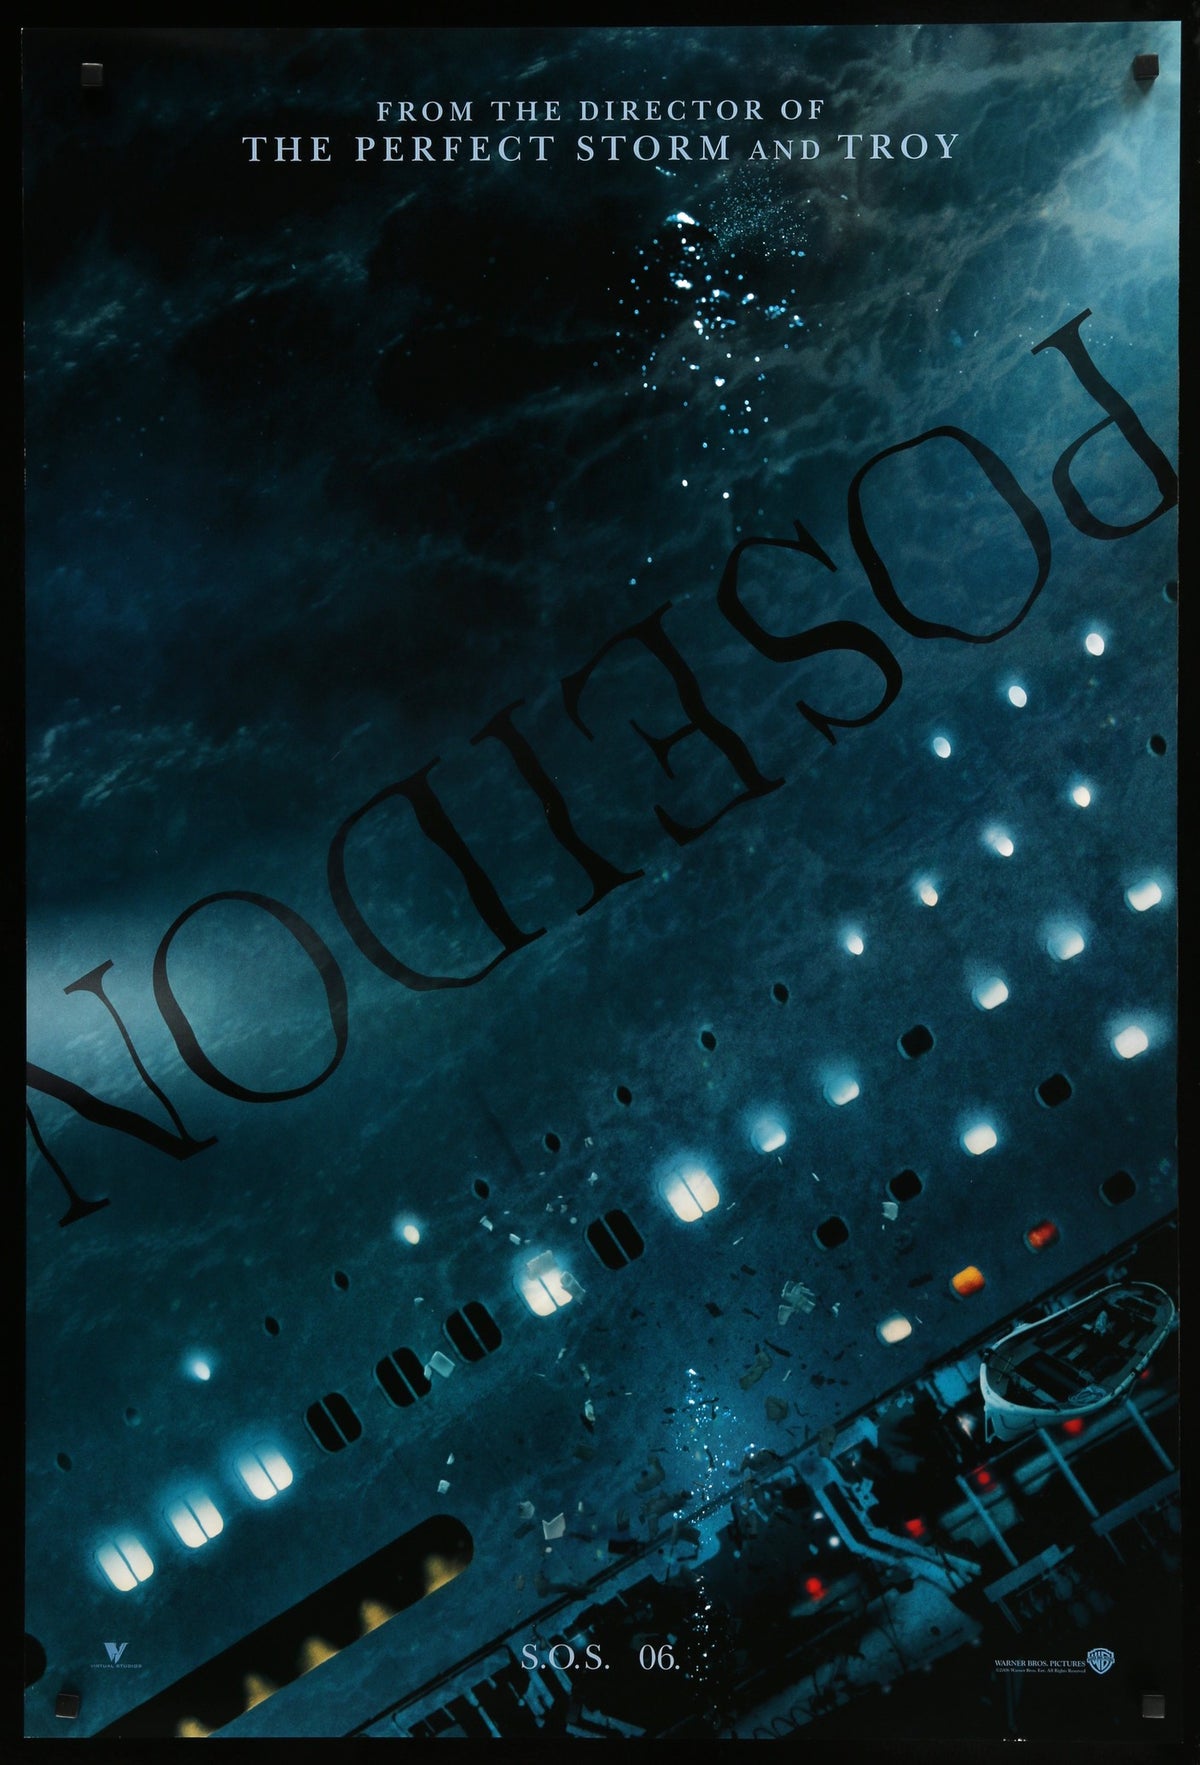 Poseidon (2006) original movie poster for sale at Original Film Art